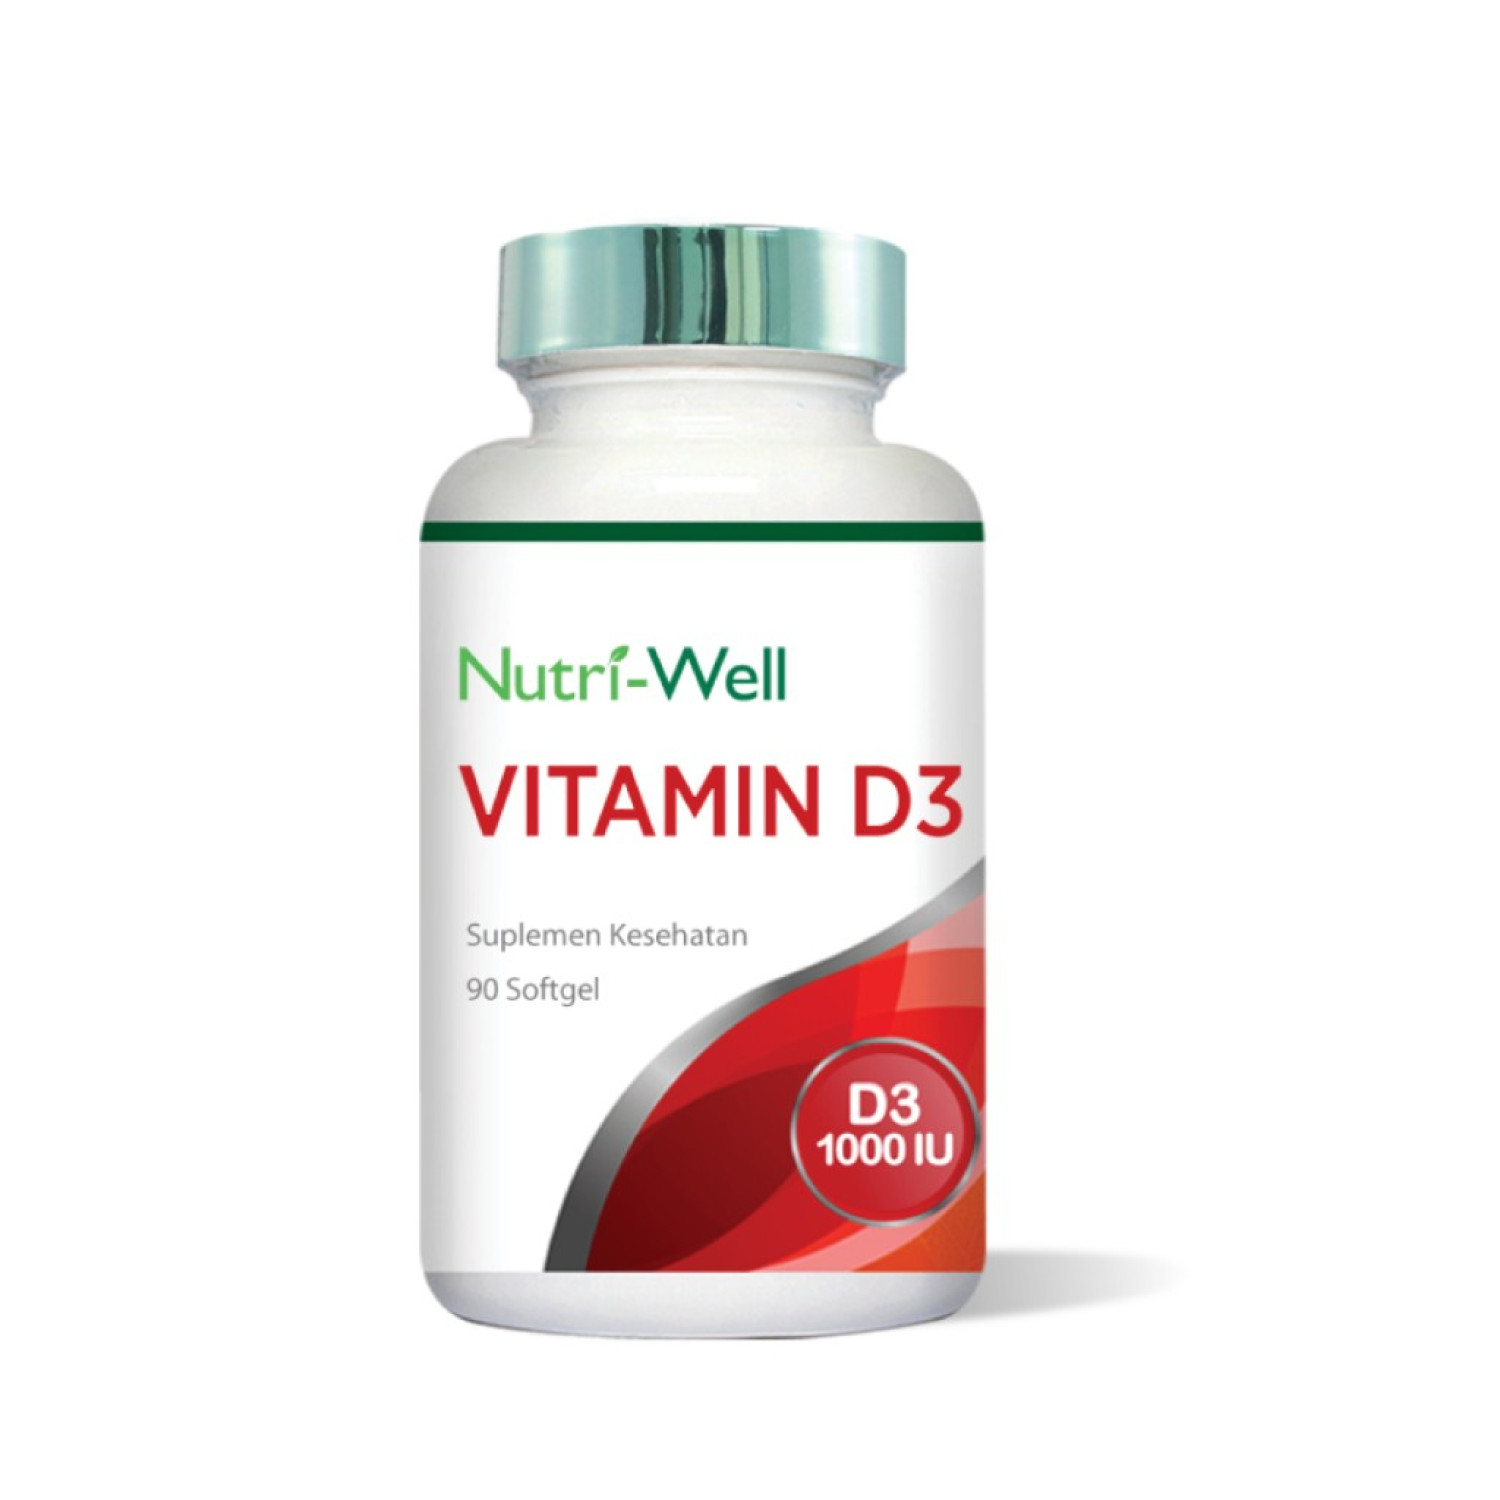 nutriwell-vitamin-d3-1000-iu-90-softgels-65432640b0593.jpeg